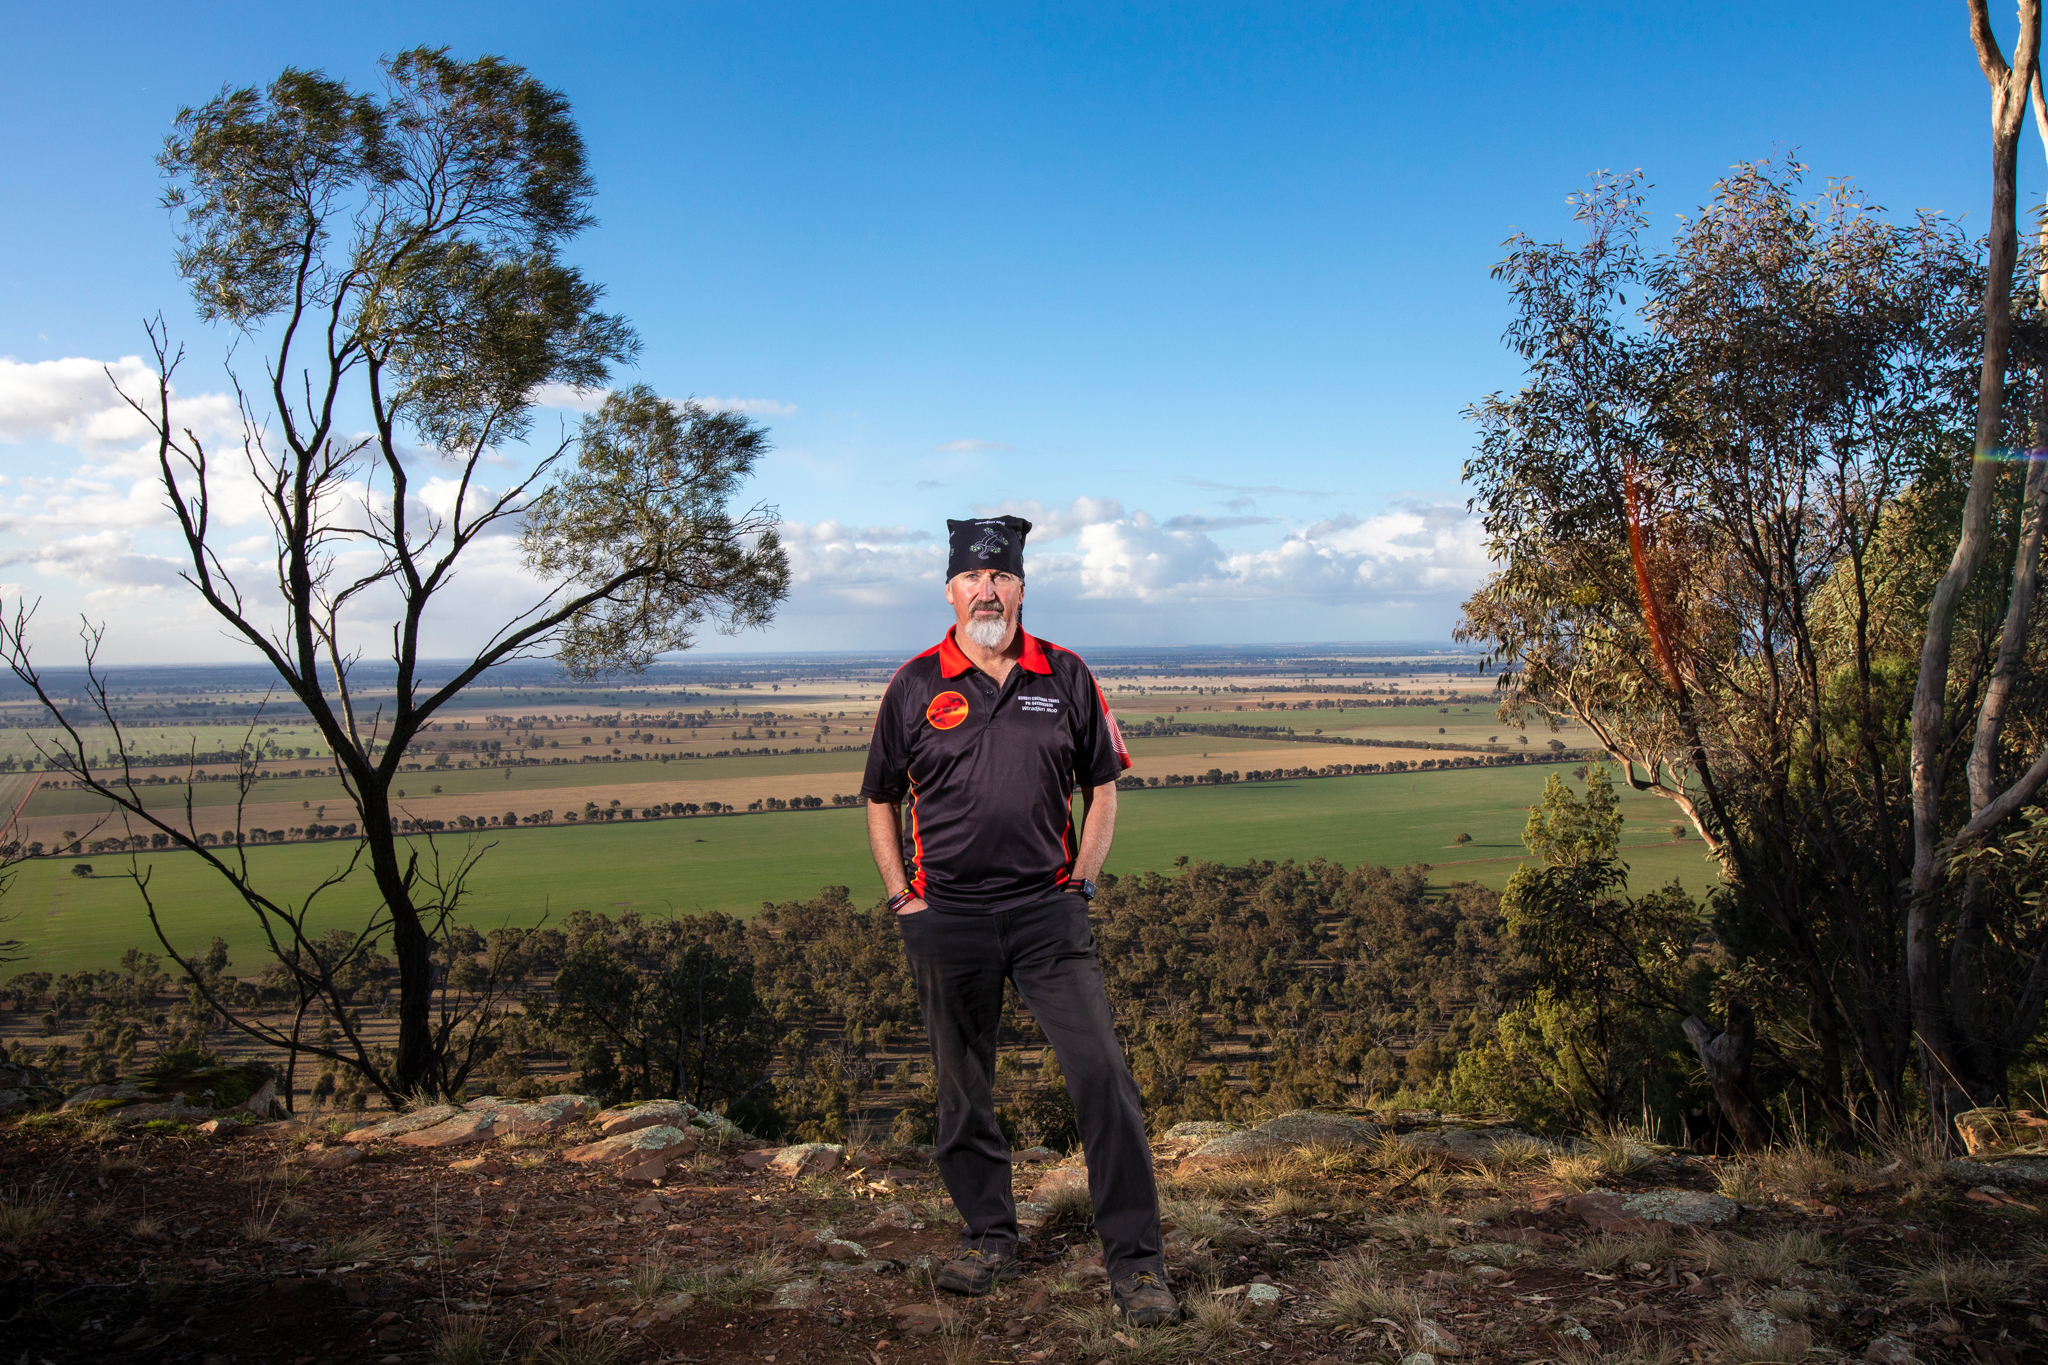 Bundyi Aboriginal Cultural Tours guide Mark Saddler in Wagga Wagga, NSW © Destination NSW 